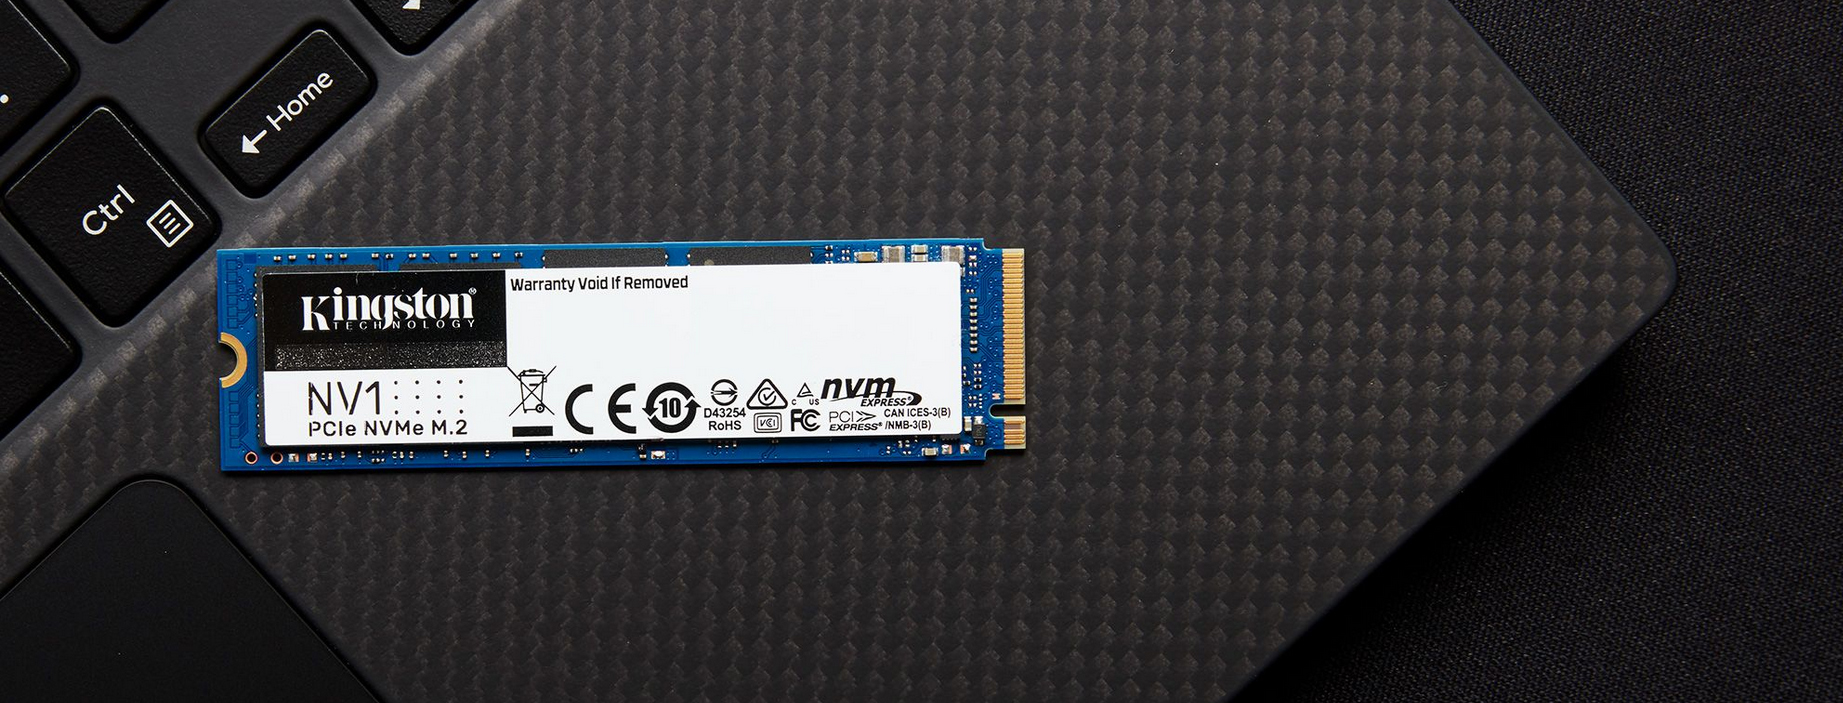 Kingston NV1 1TB M.2 2280 NVMe PCIe Internal SSD Up to 2100 MB/s 